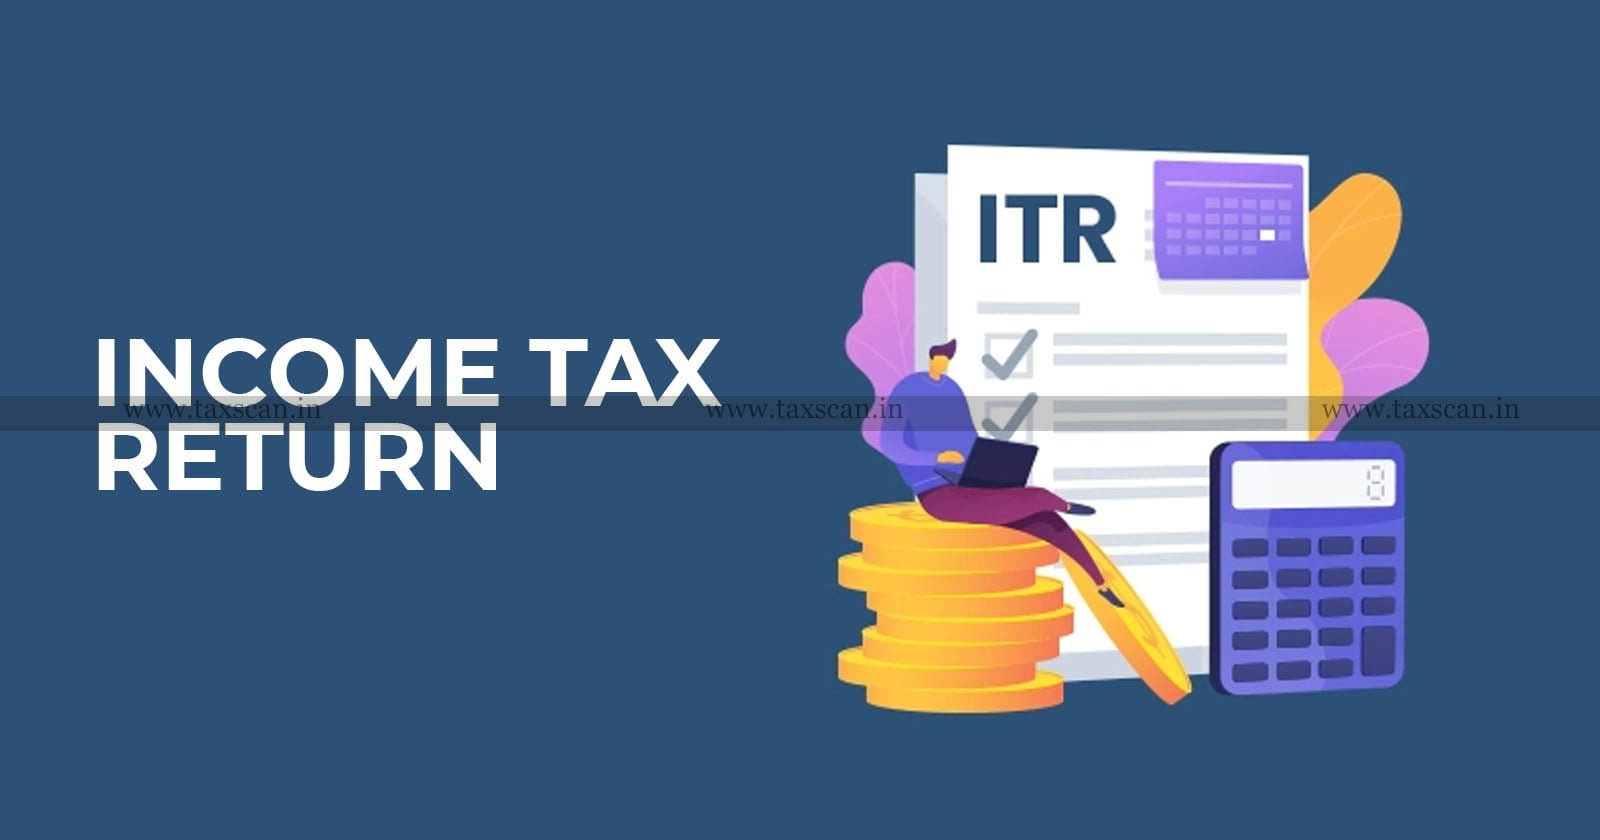 Income Tax Return - Schedule AL - tax filing - ITR for HNIs - Income Tax Schedule AL - taxscan